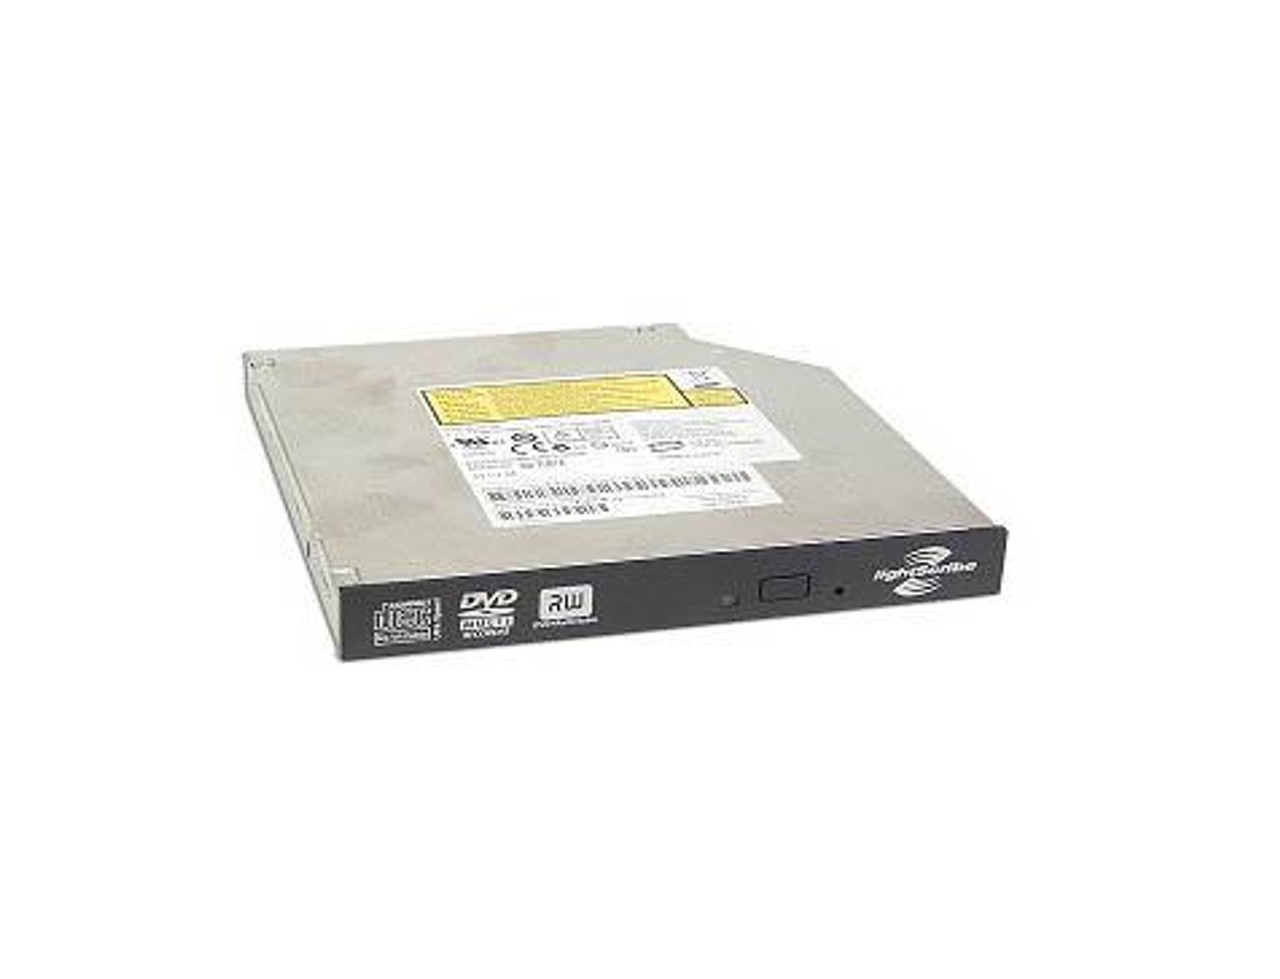 507116-001 - HP 550 DVD+/-RW & CD-RW SuperMulti Light-Scribe Dual Layer Optical Drive